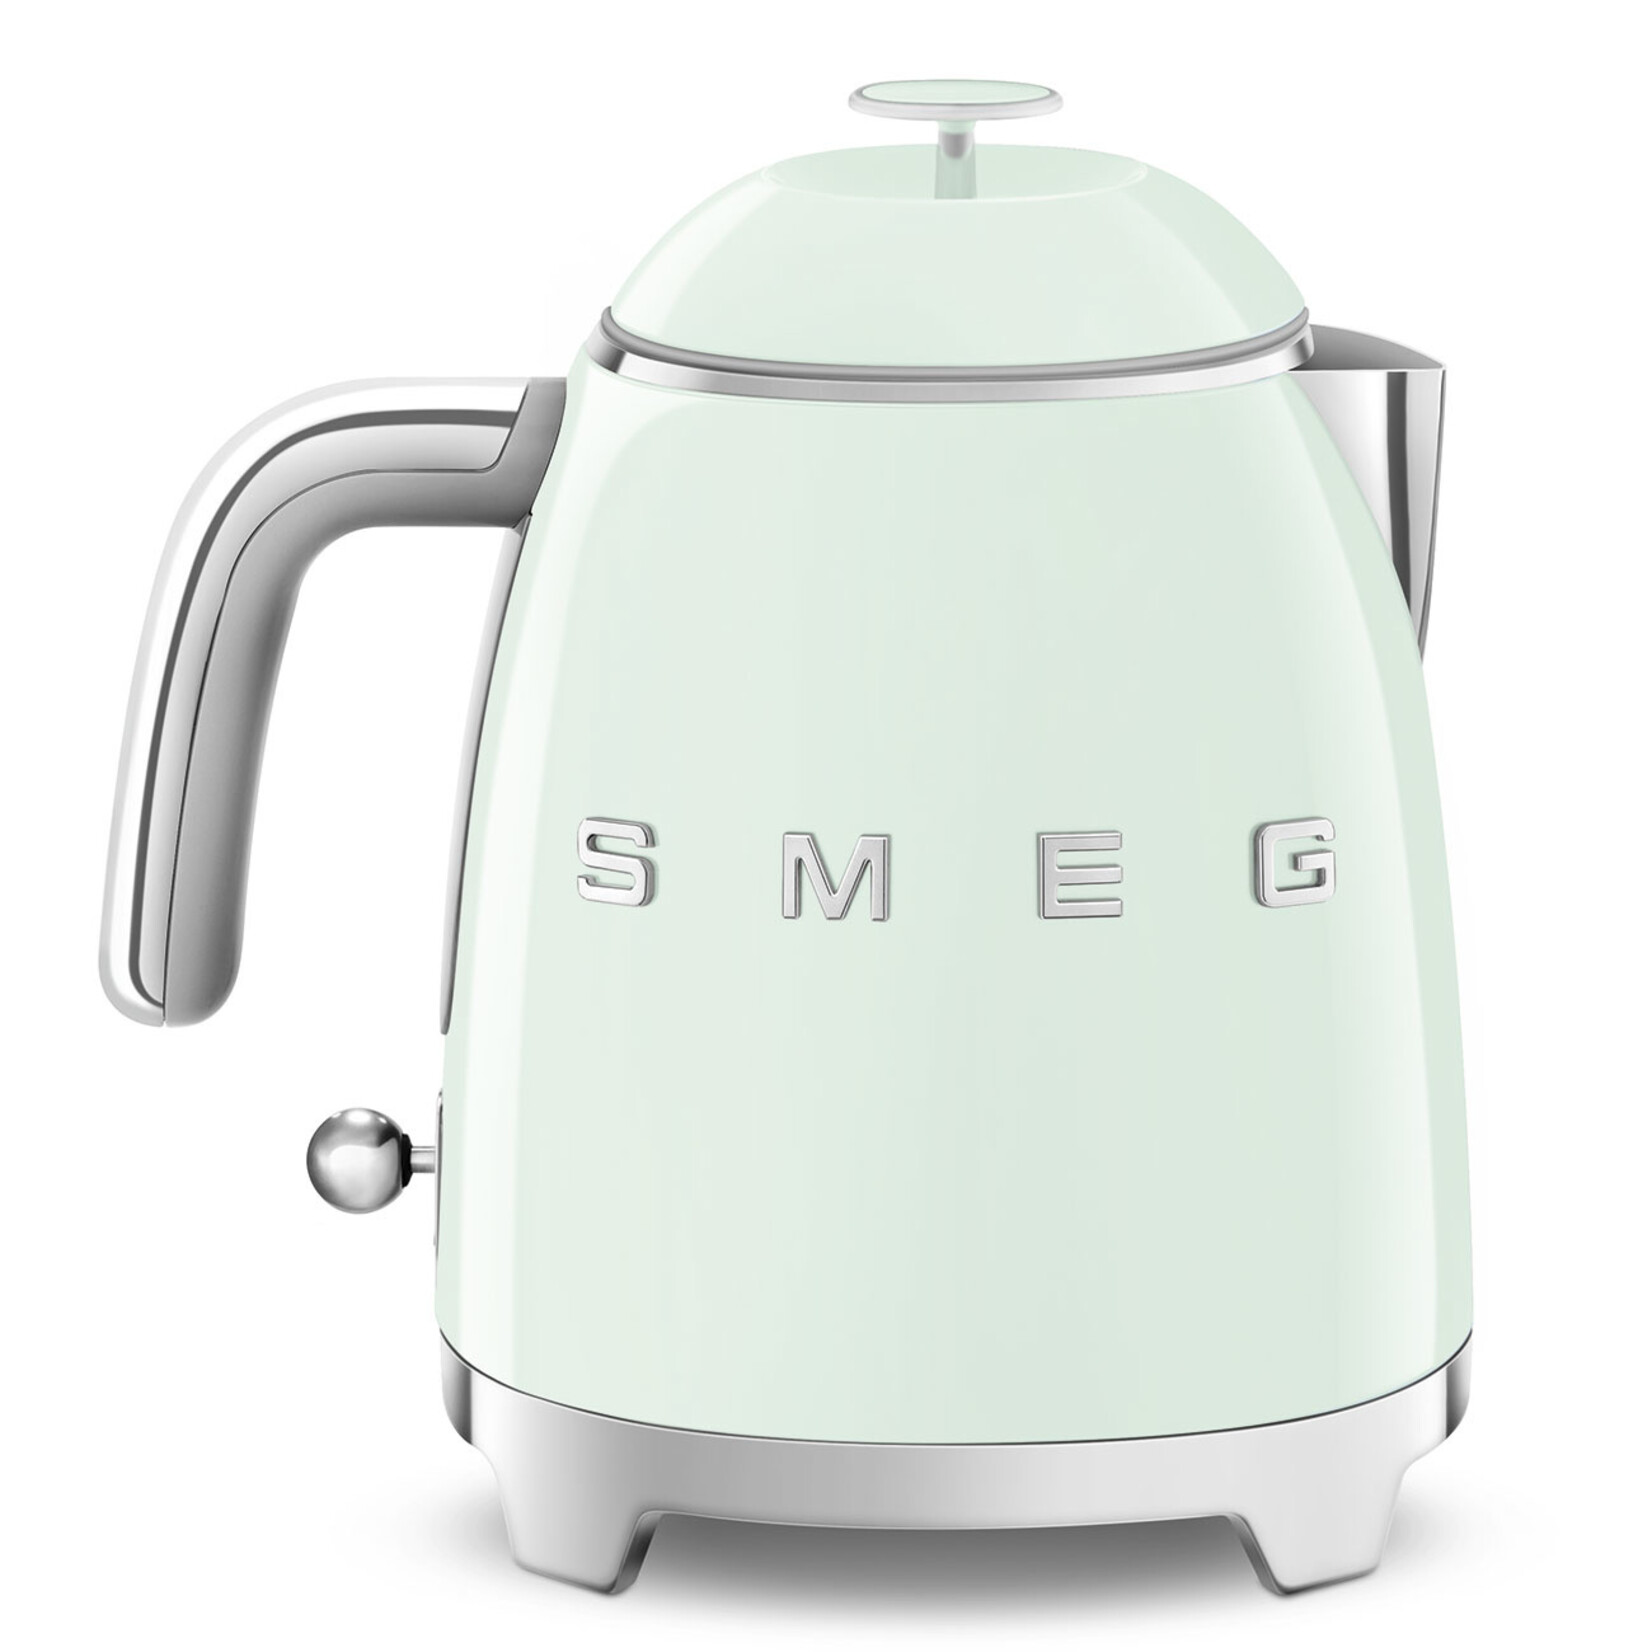 https://cdn.shoplightspeed.com/shops/659299/files/51862634/1652x1652x2/smeg-50s-retro-style-aesthetic-7-cup-kettle.jpg